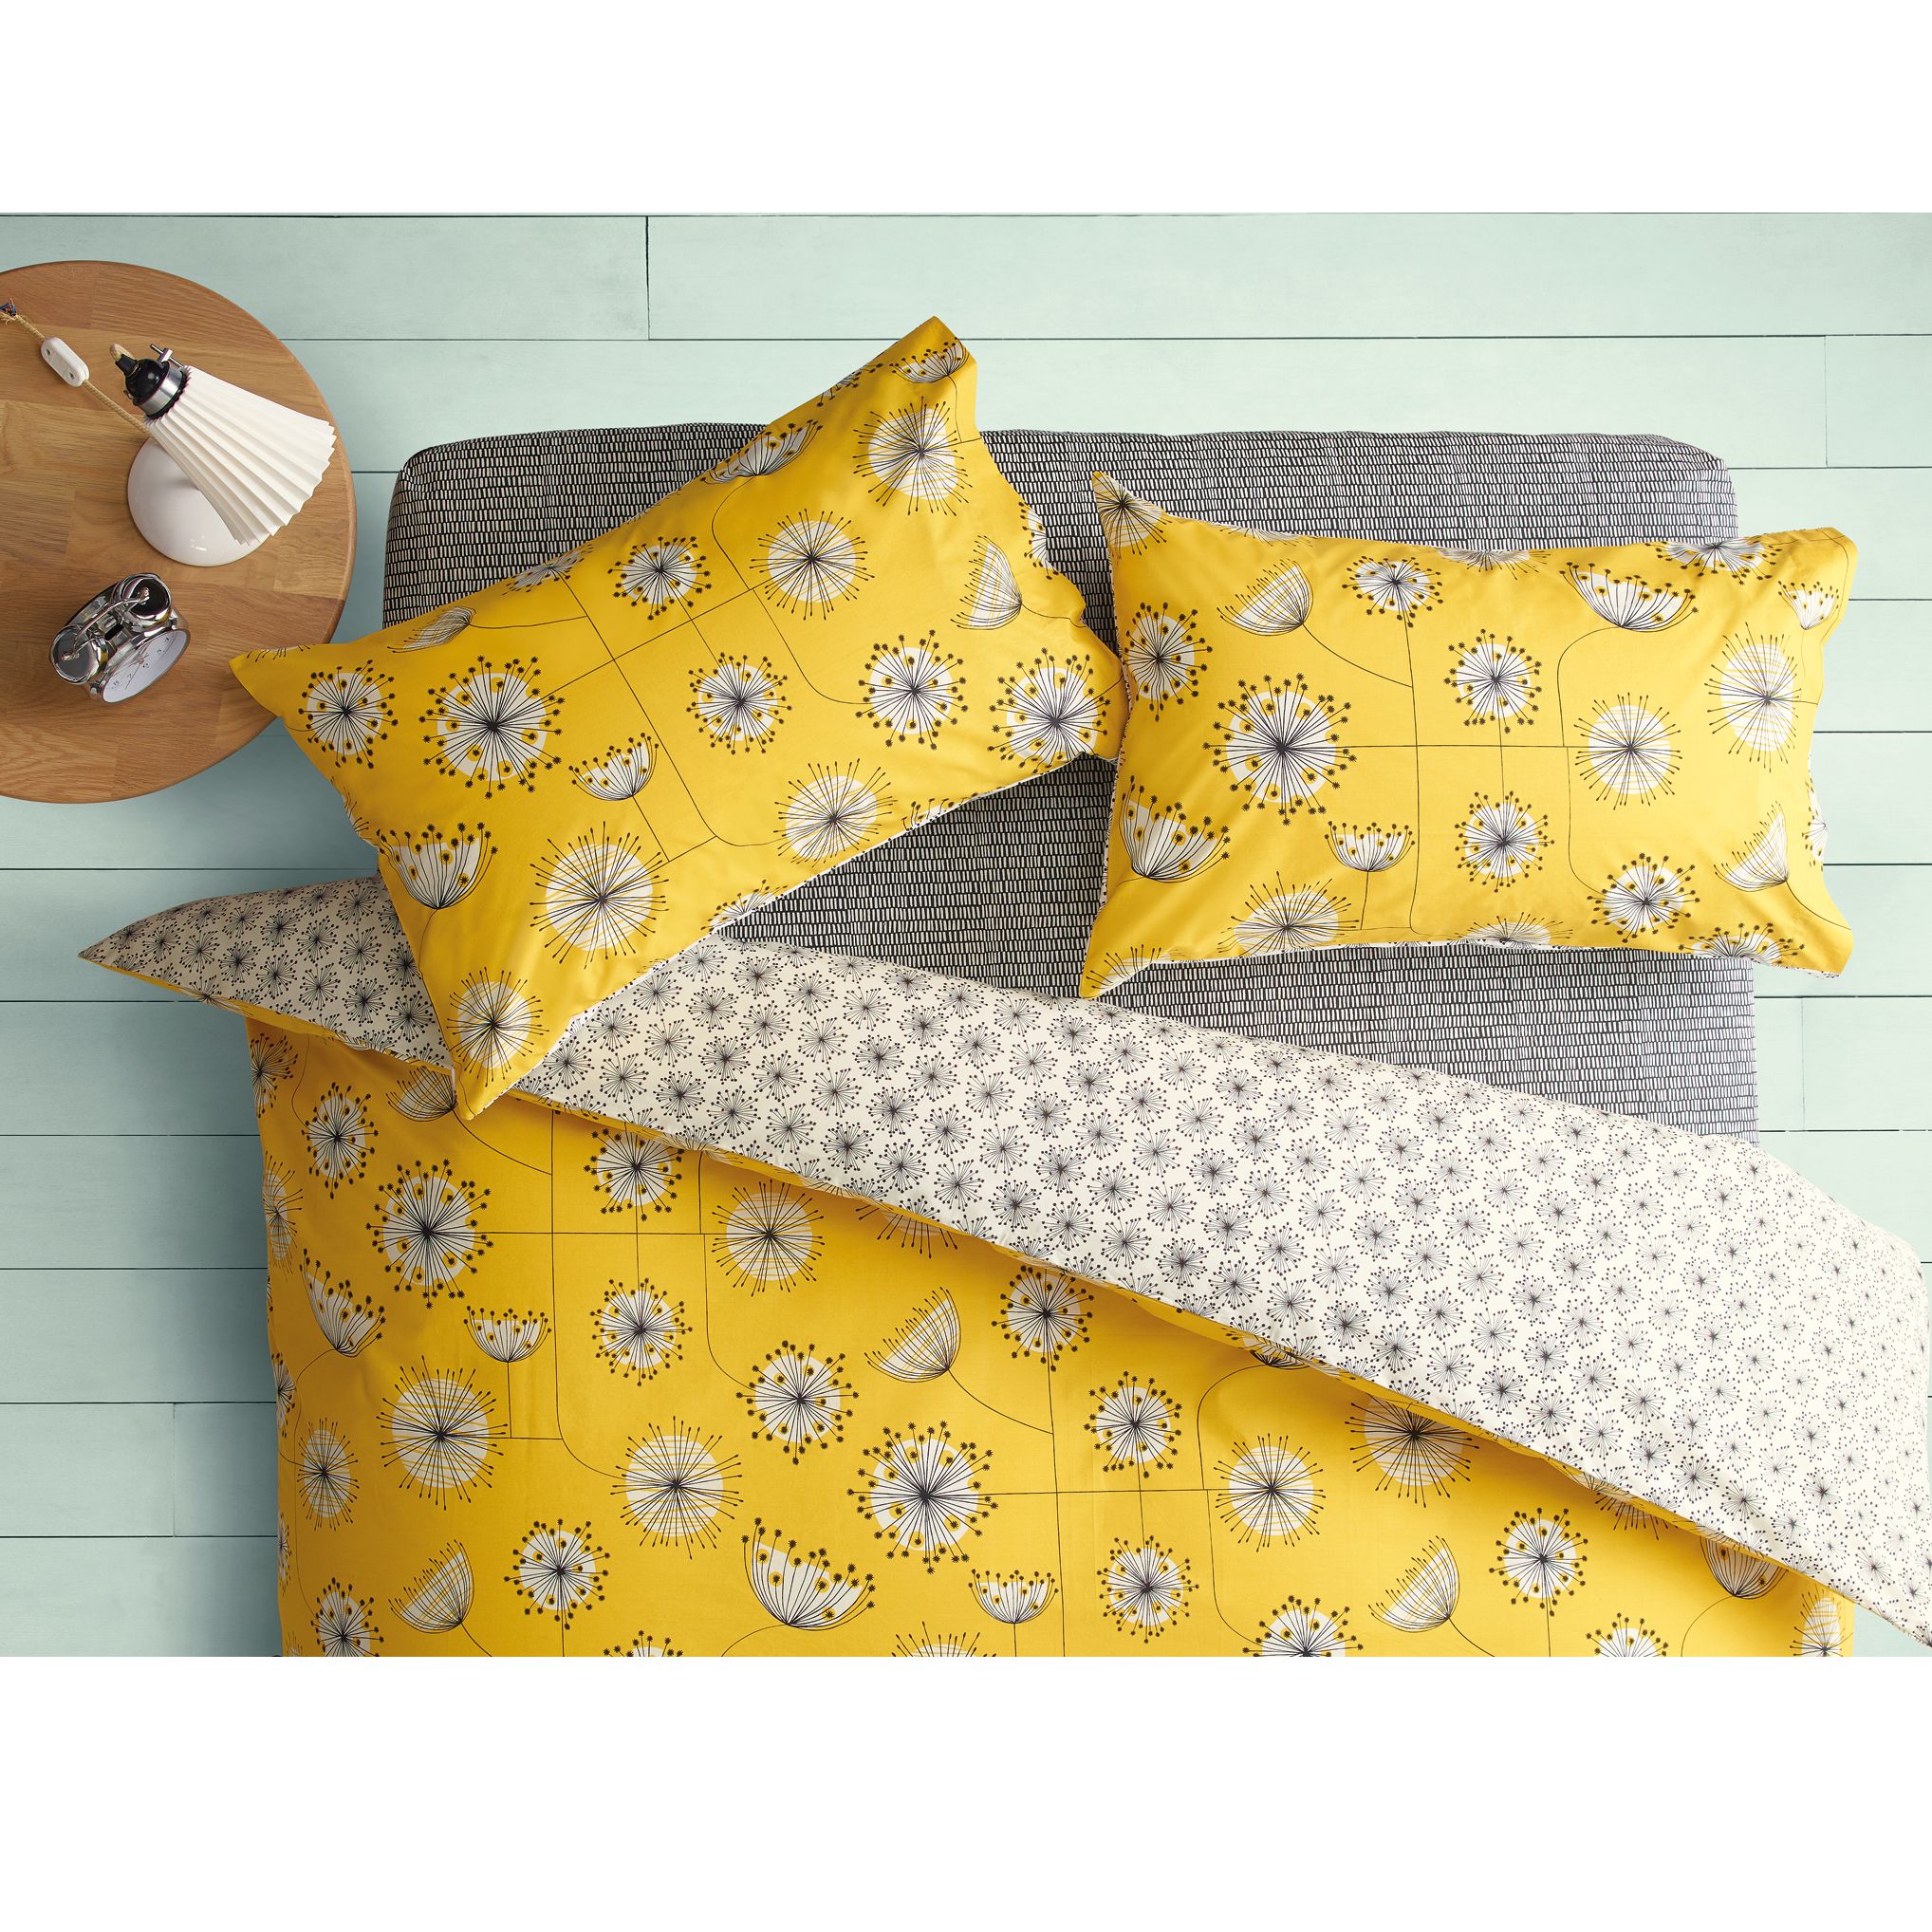 MissPrint Home Dandelion Mobile Cotton Duvet Cover and Pillowcase Set, Yellow